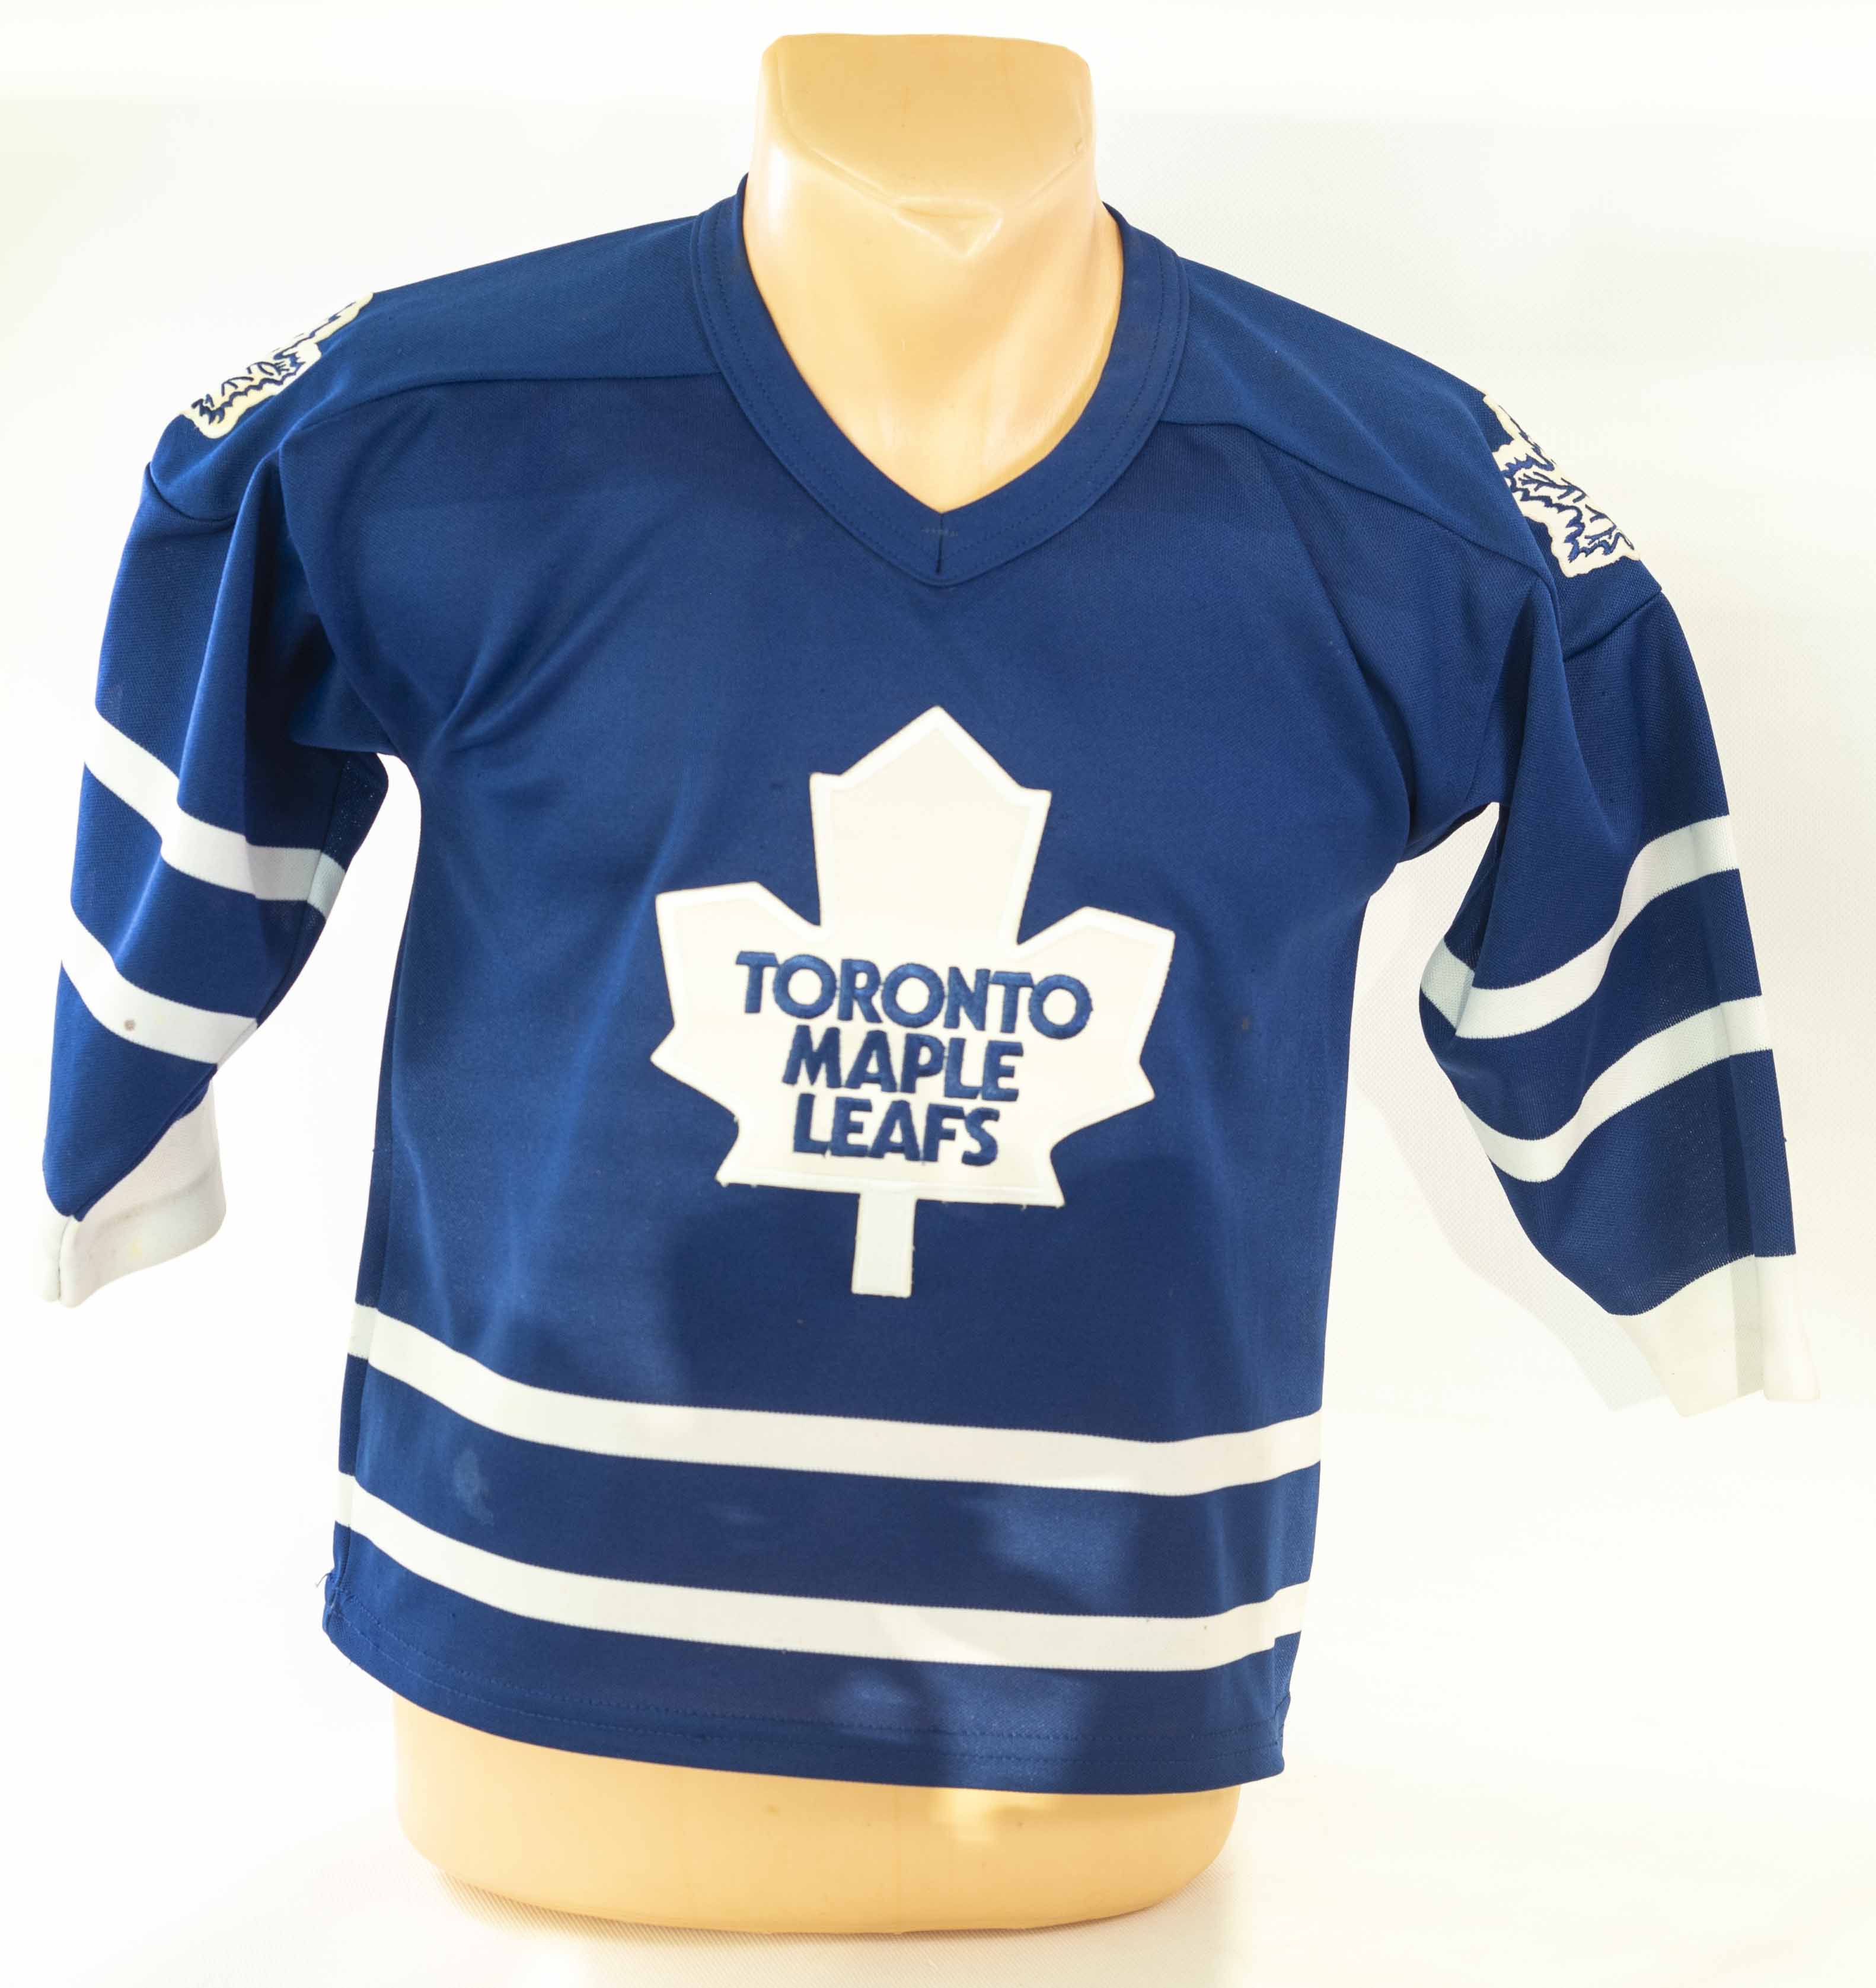 Dres dětský, replika, Toronto Maple Leafs